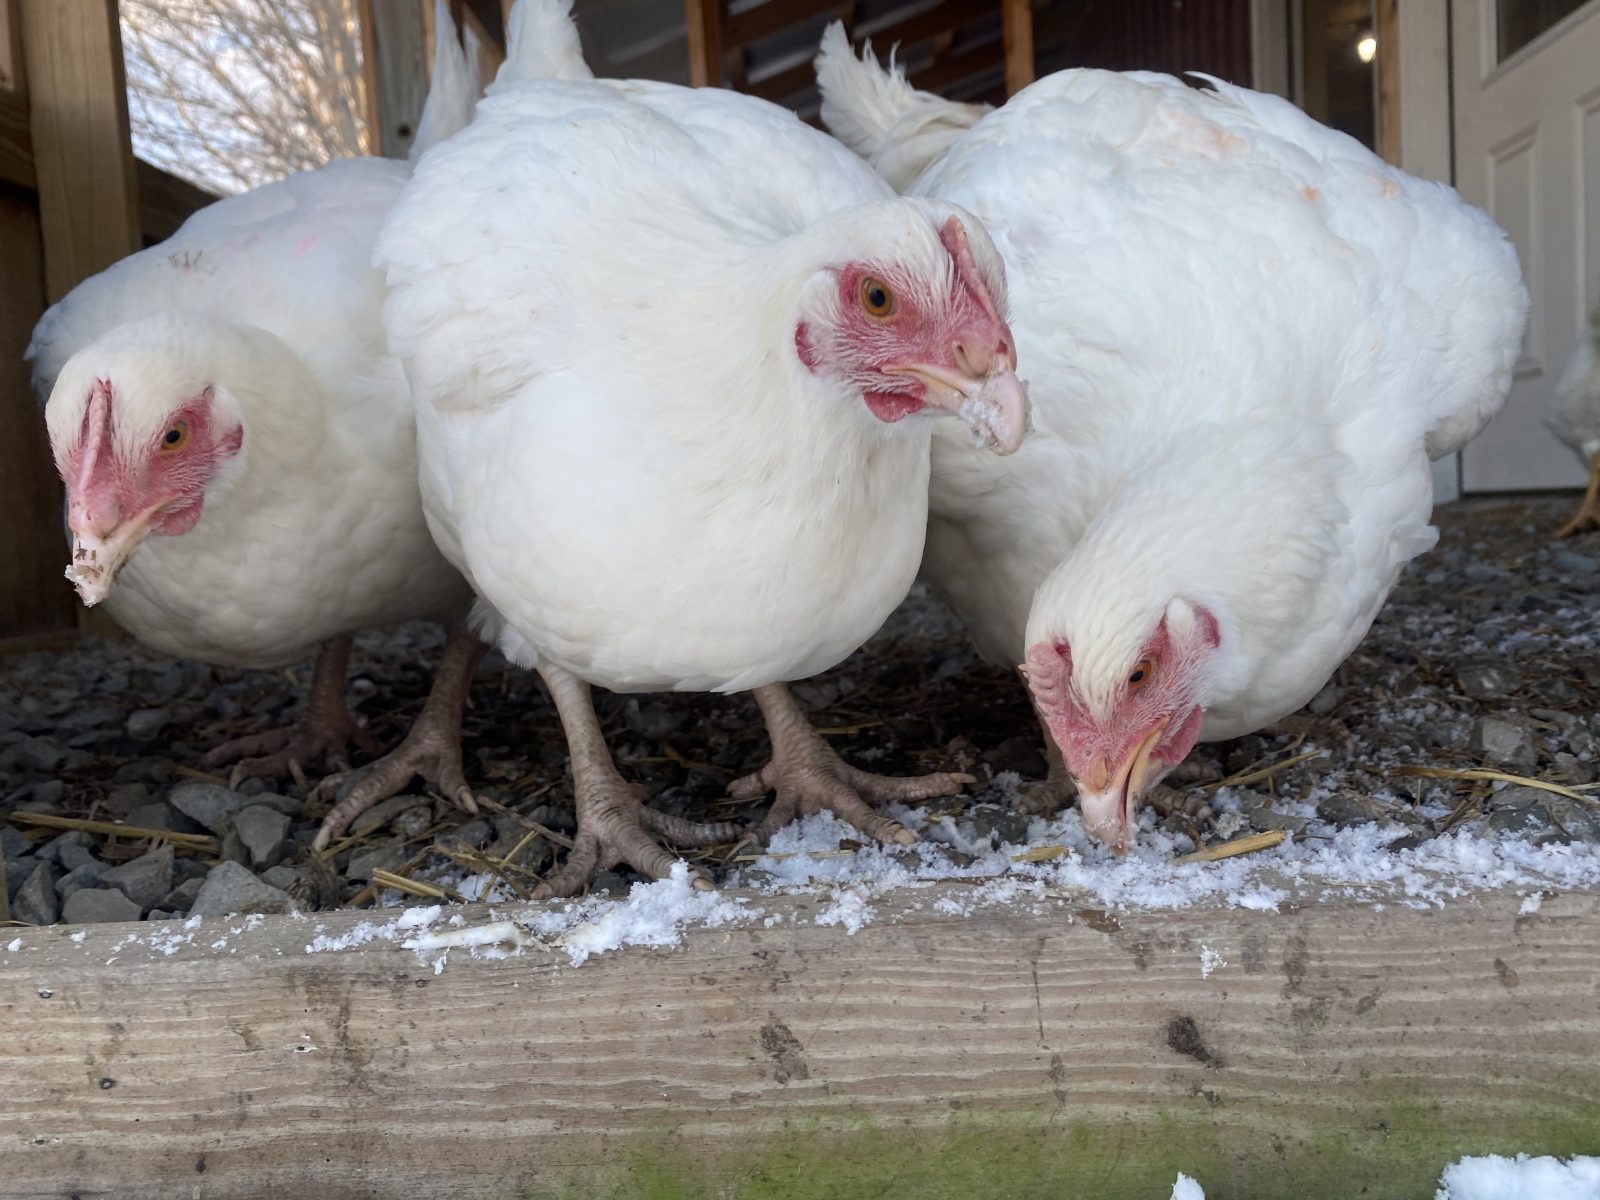 Lemondrop hen and friends enjoying the snow at Farm Sanctuary